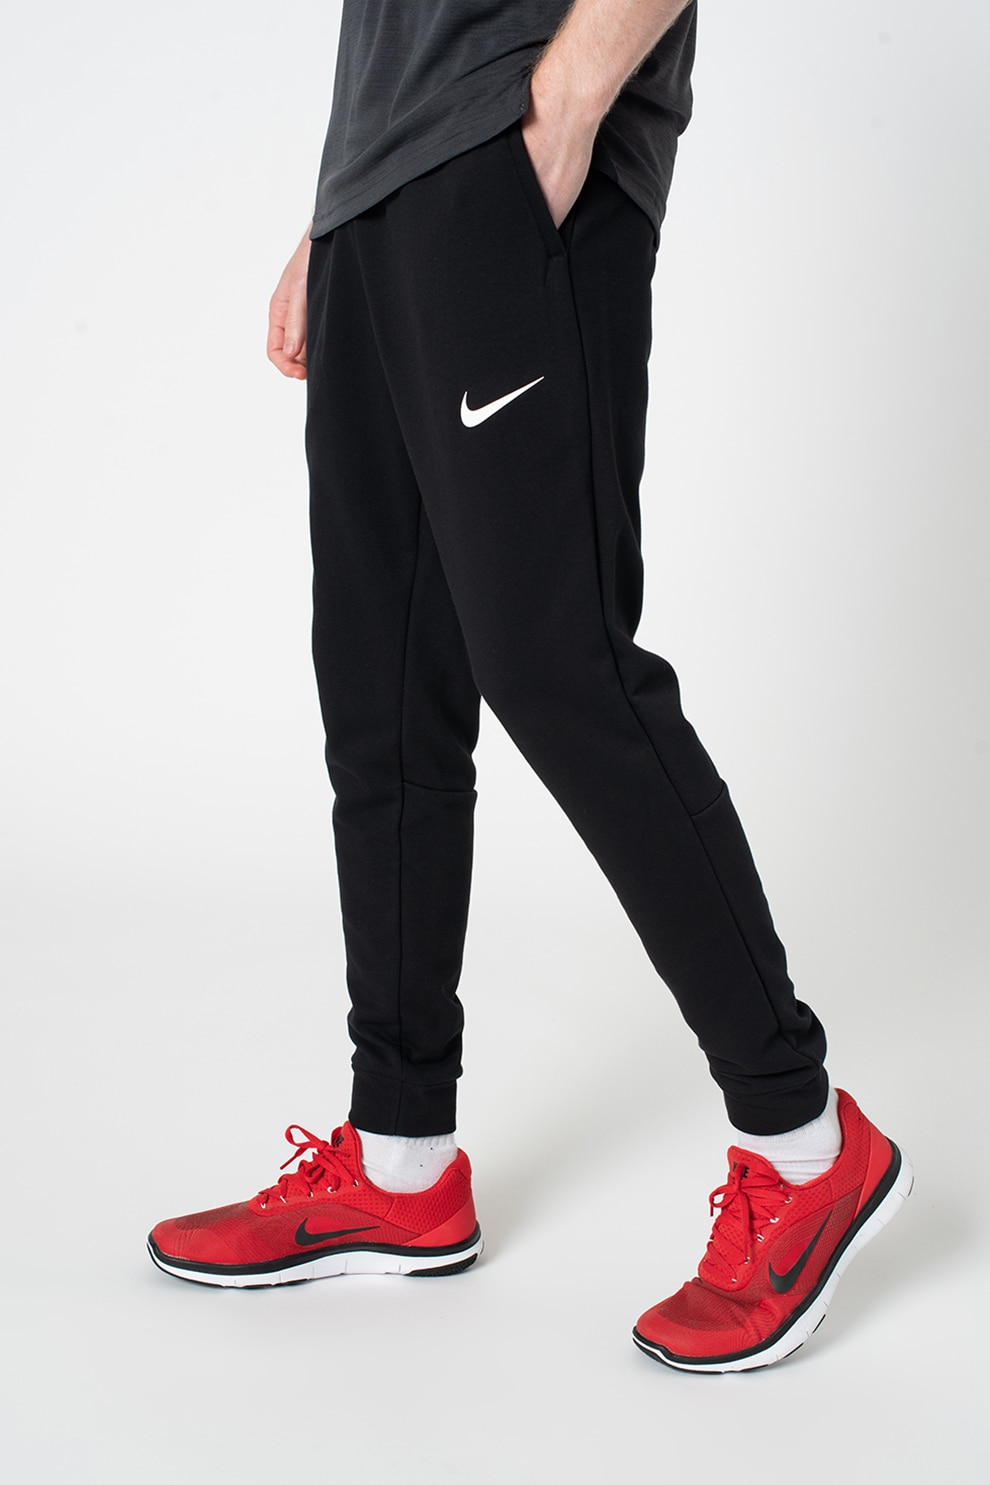 Nike, Pantaloni conici cu tehnologie Dri-Fit pentru antrenament, Negru/Alb, - eMAG.ro